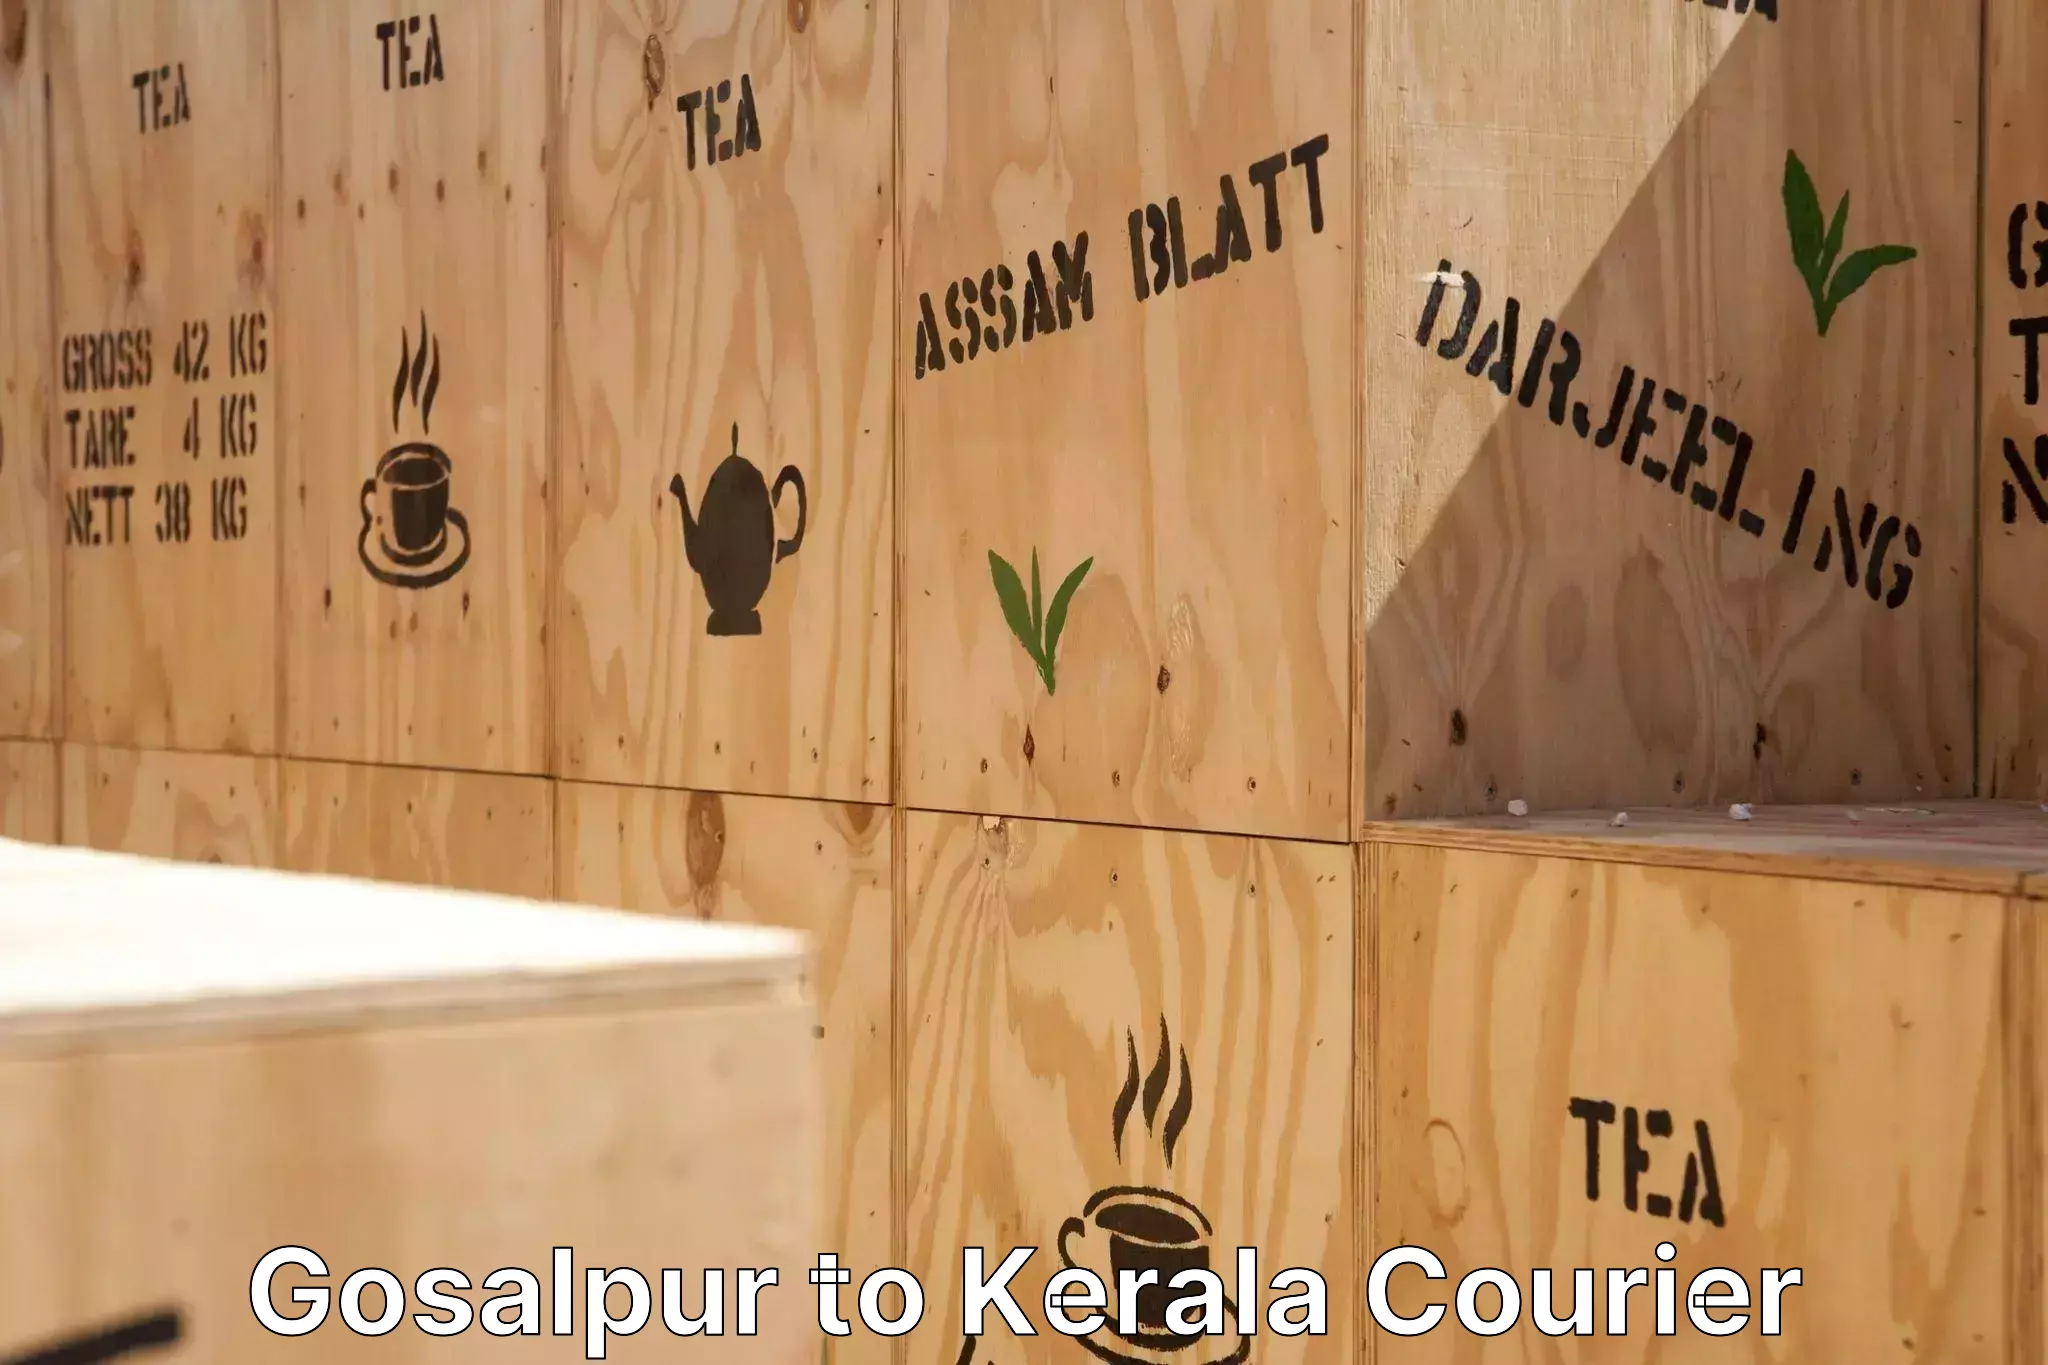 Furniture delivery service Gosalpur to Kerala